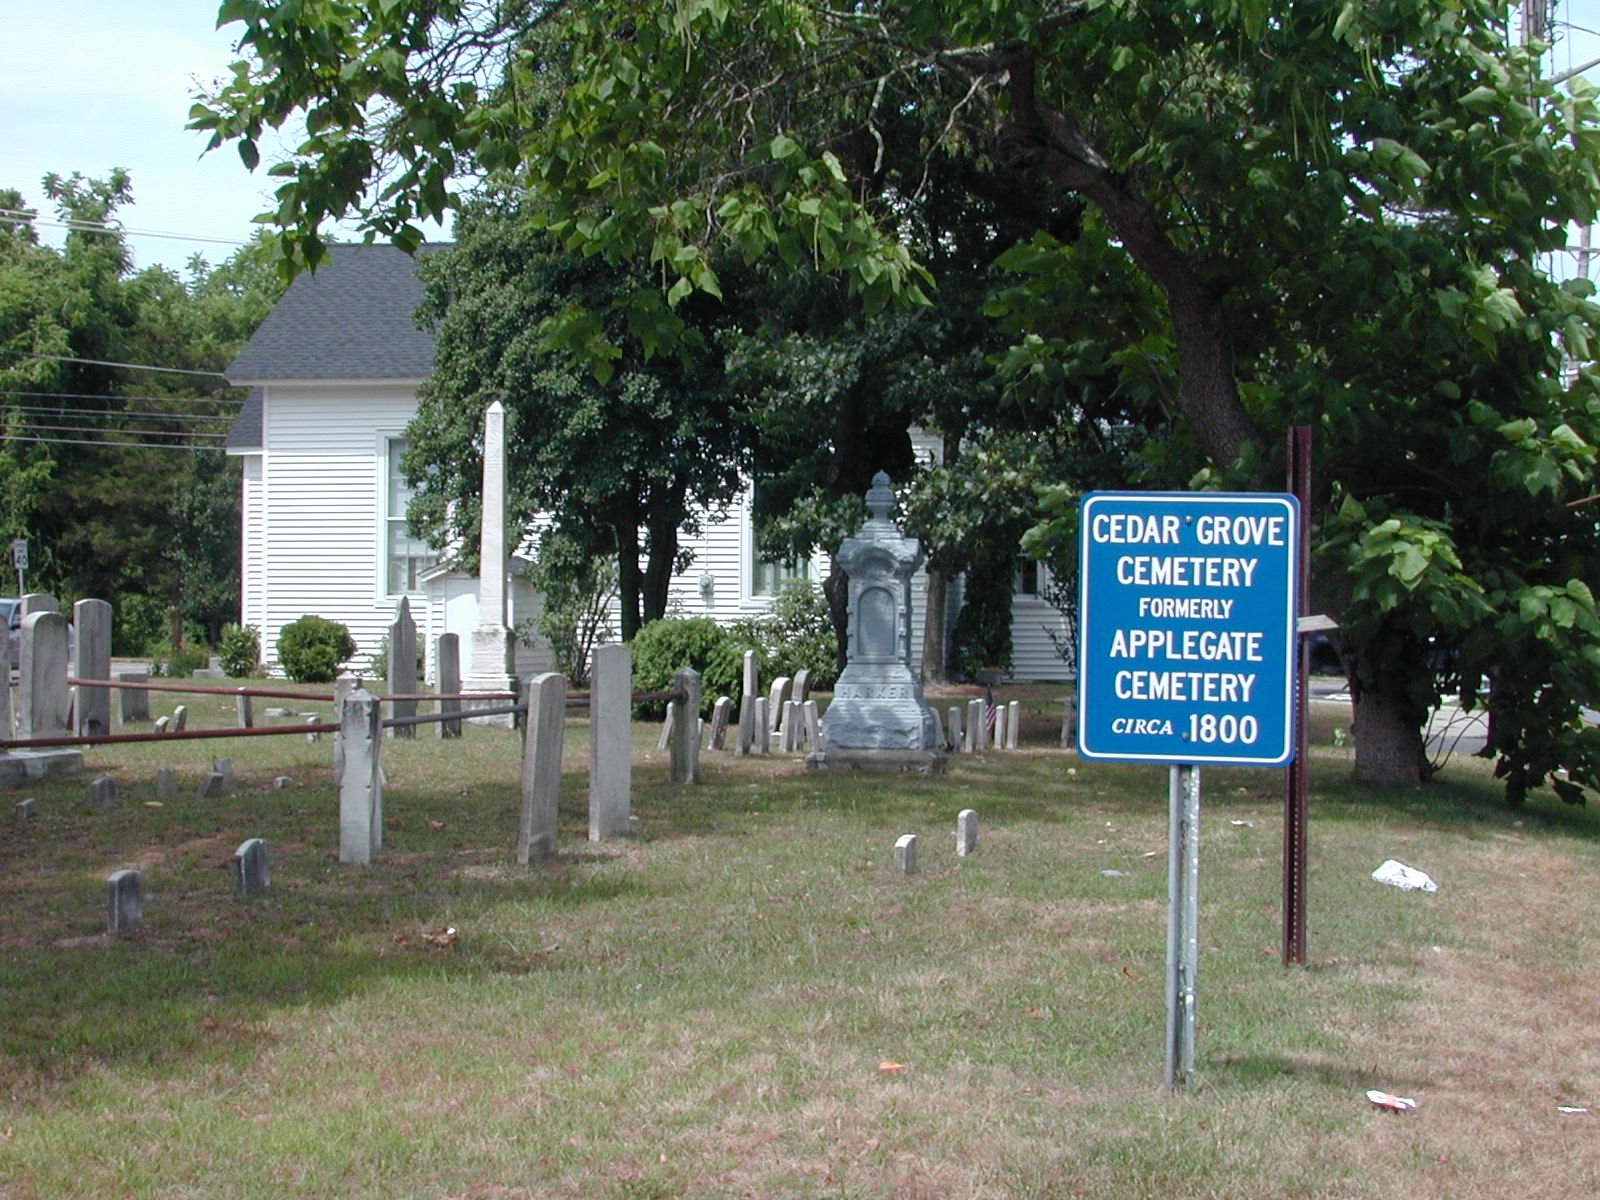 [Applegate Cemetery Image]